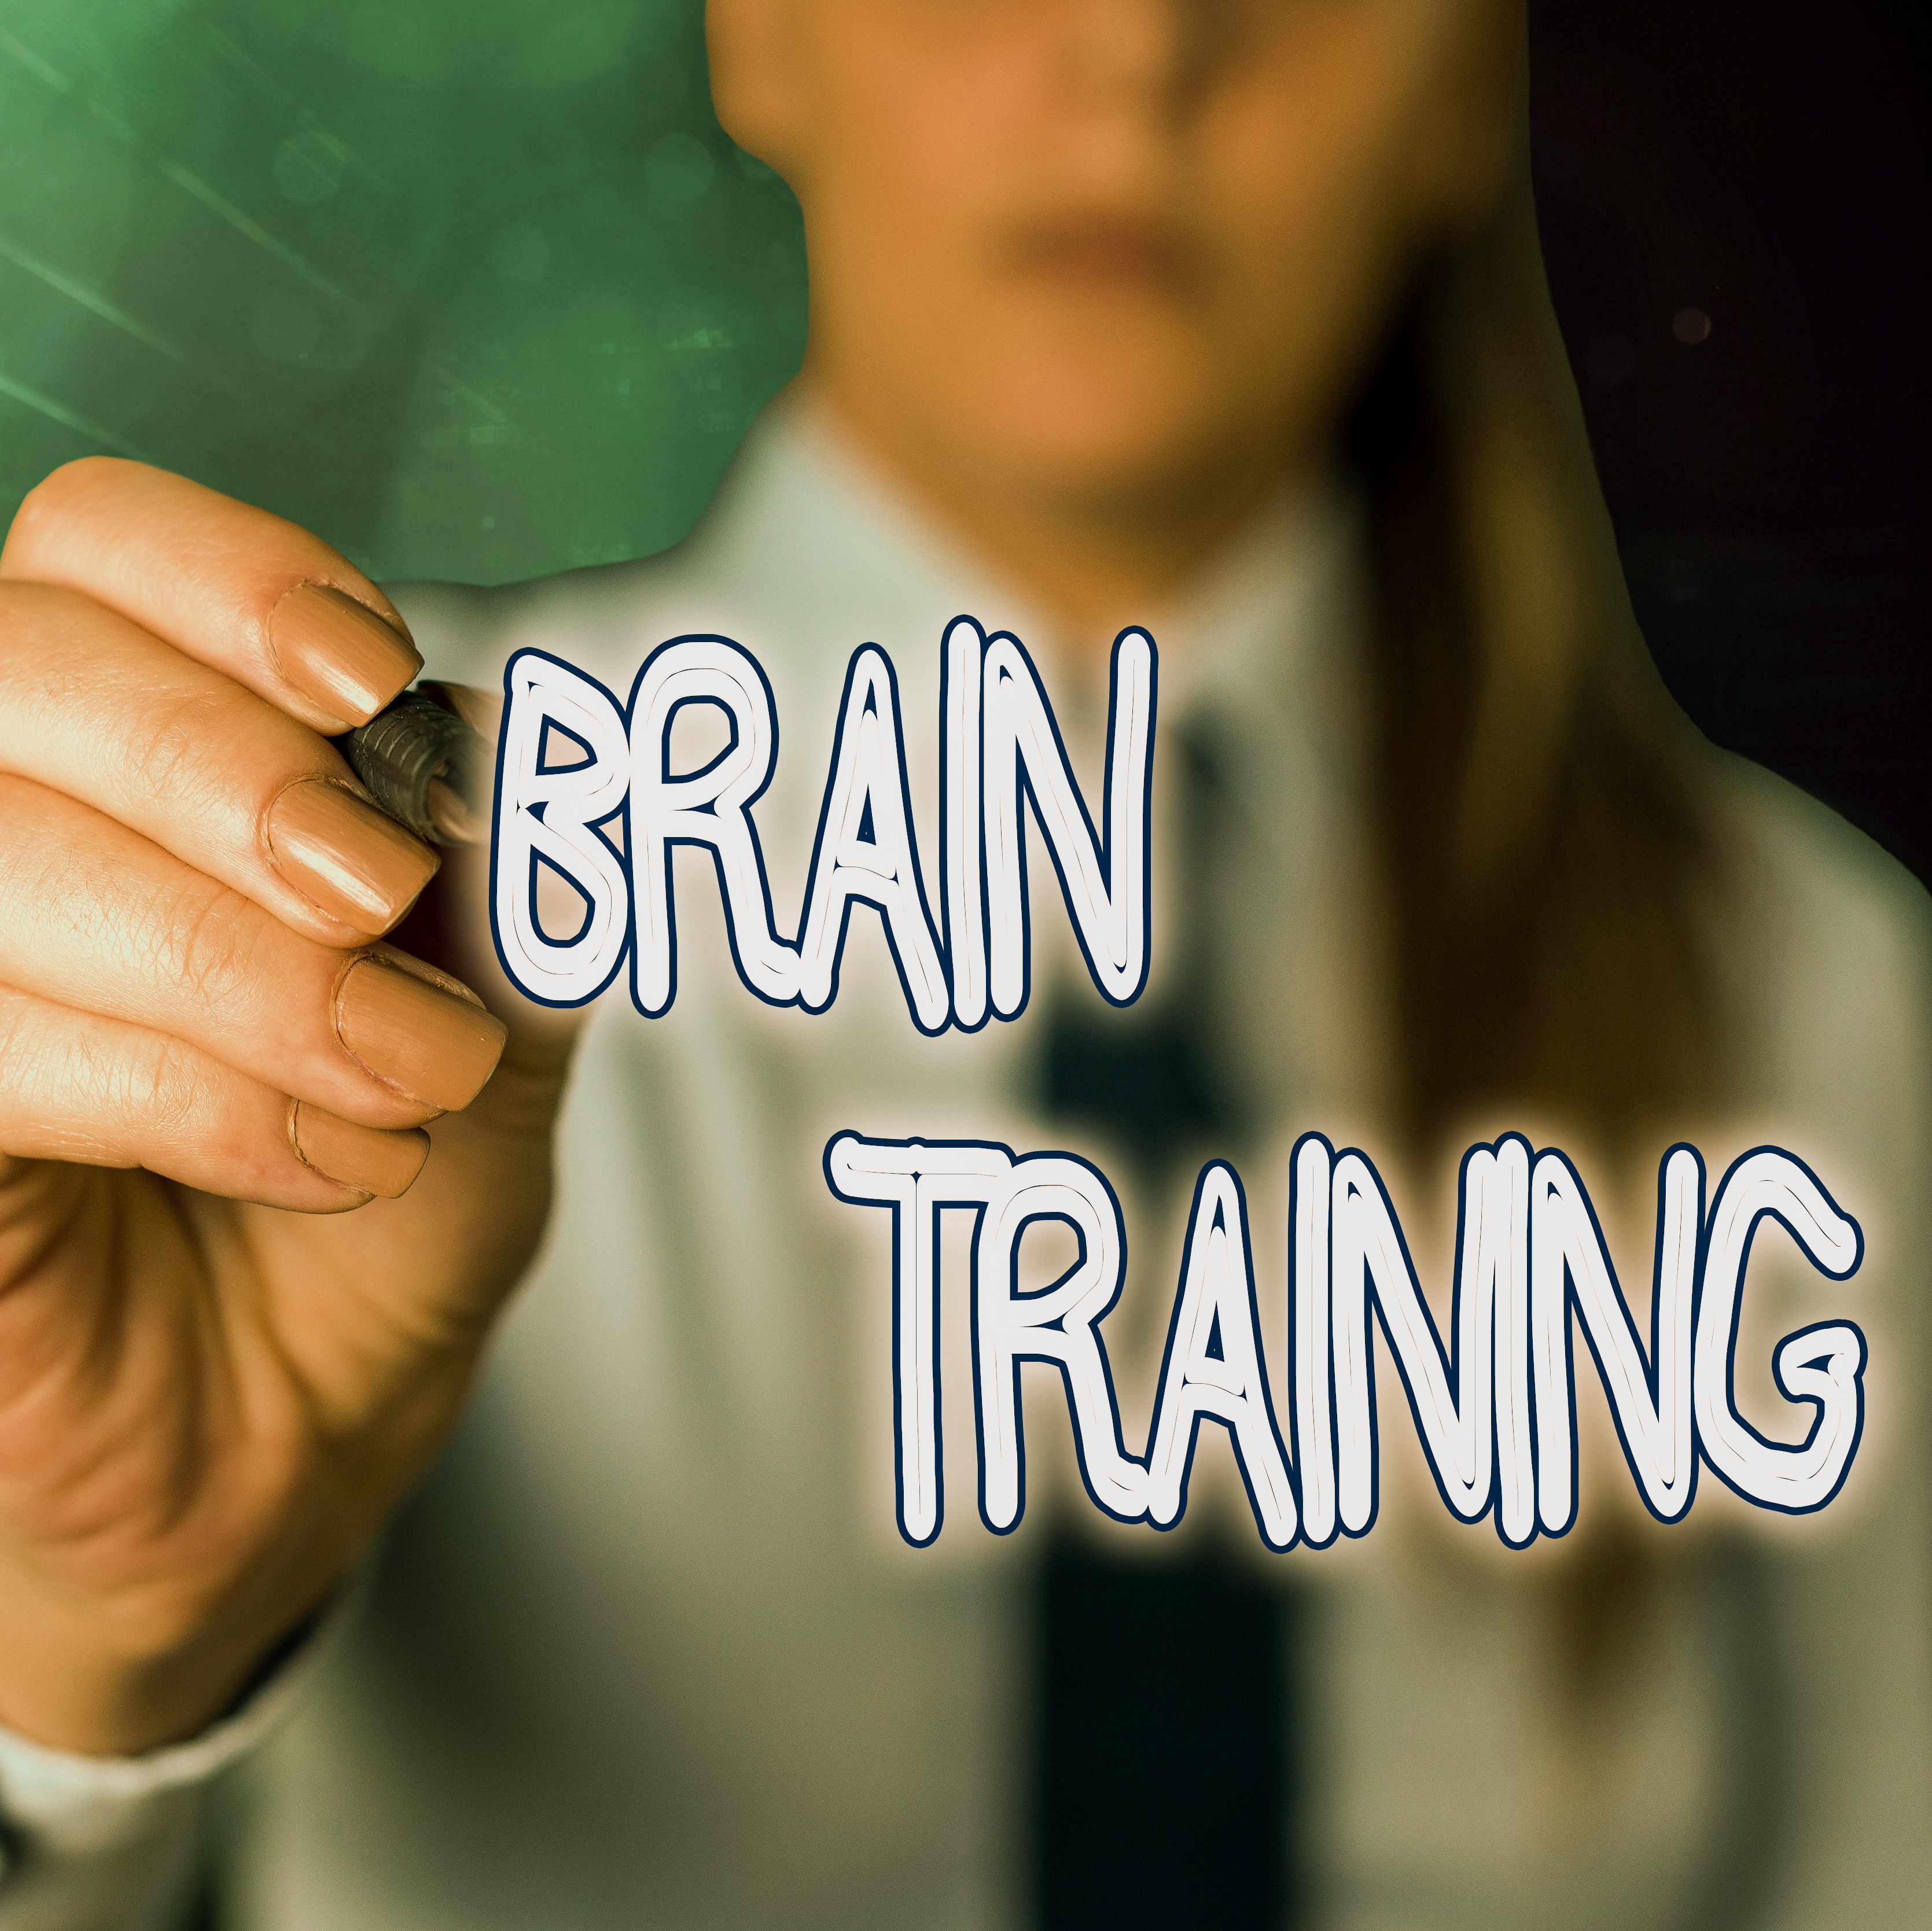 Brain Training To Battle COVID-19